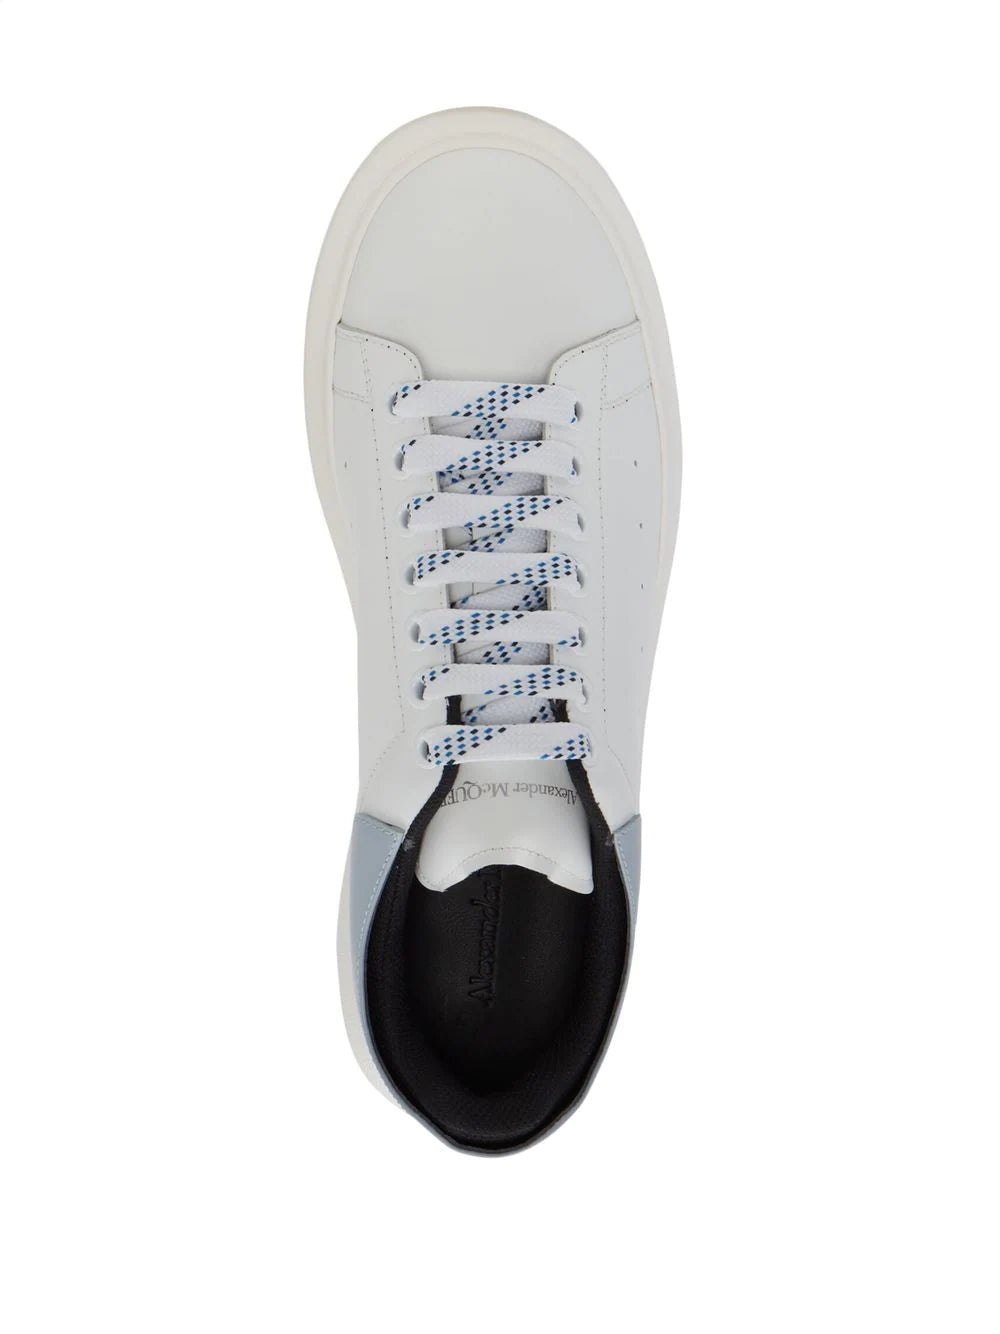 ALEXANDER MCQUEEN Oversized Sneakers White/Deep Blue - MAISONDEFASHION.COM